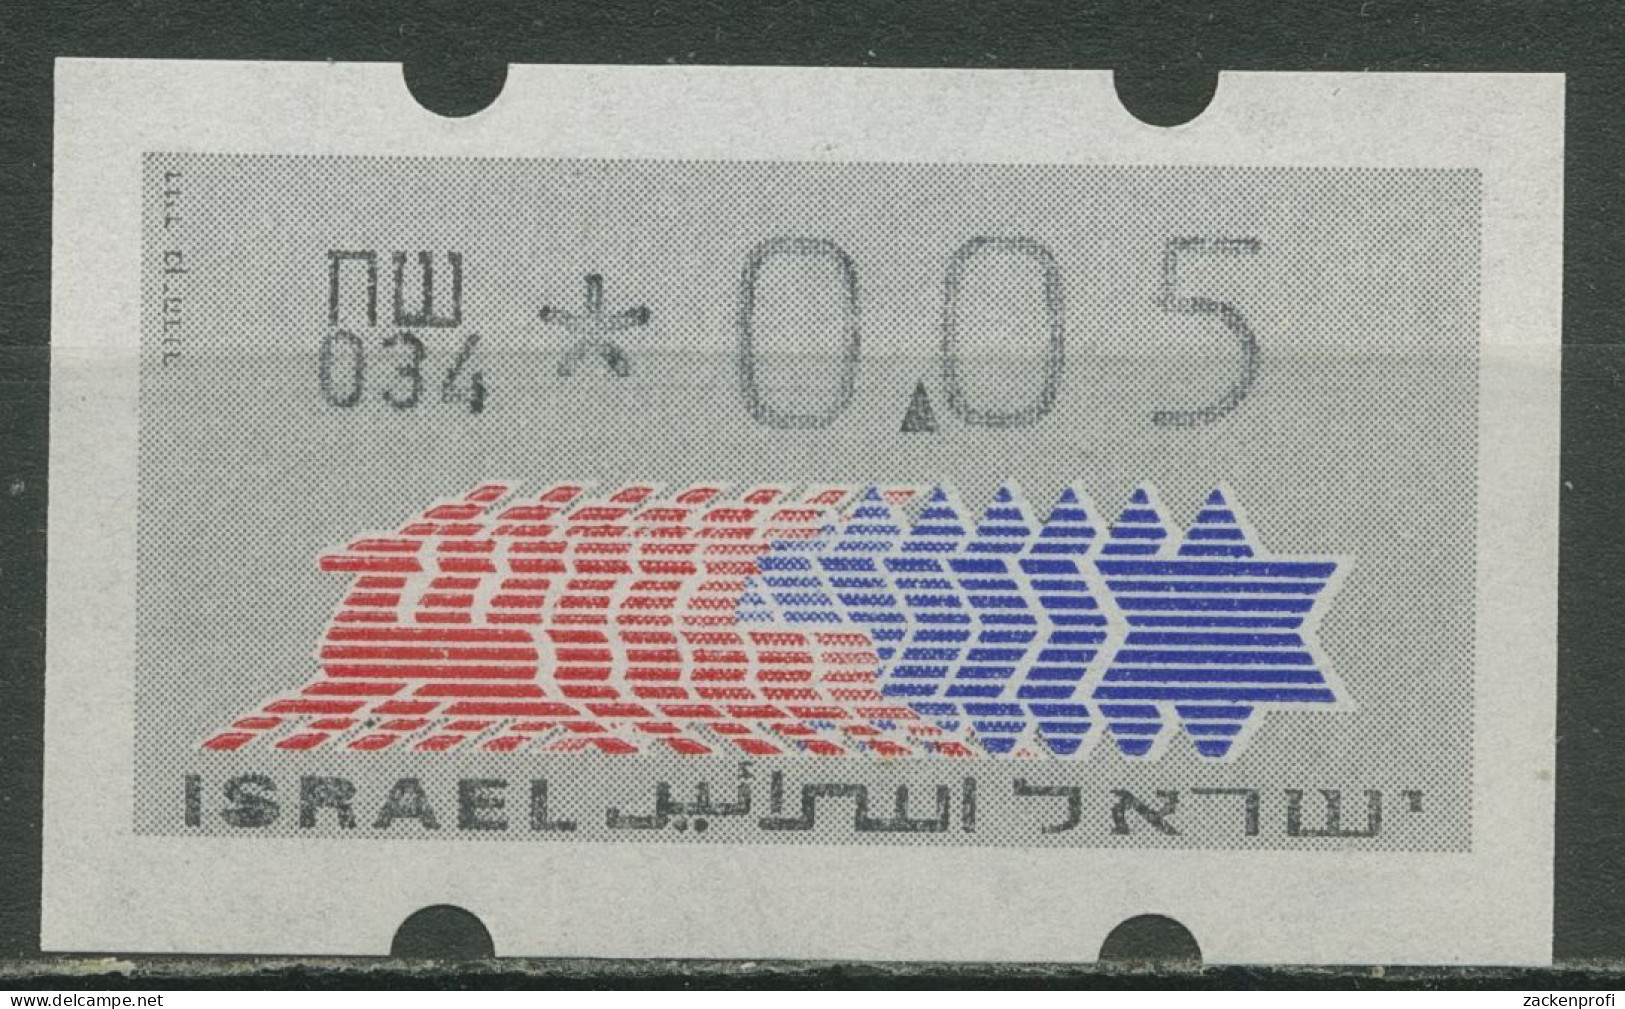 Israel ATM 1990 Hirsch Automat 034 Einzelwert ATM 3.4.34 Postfrisch - Frankeervignetten (Frama)